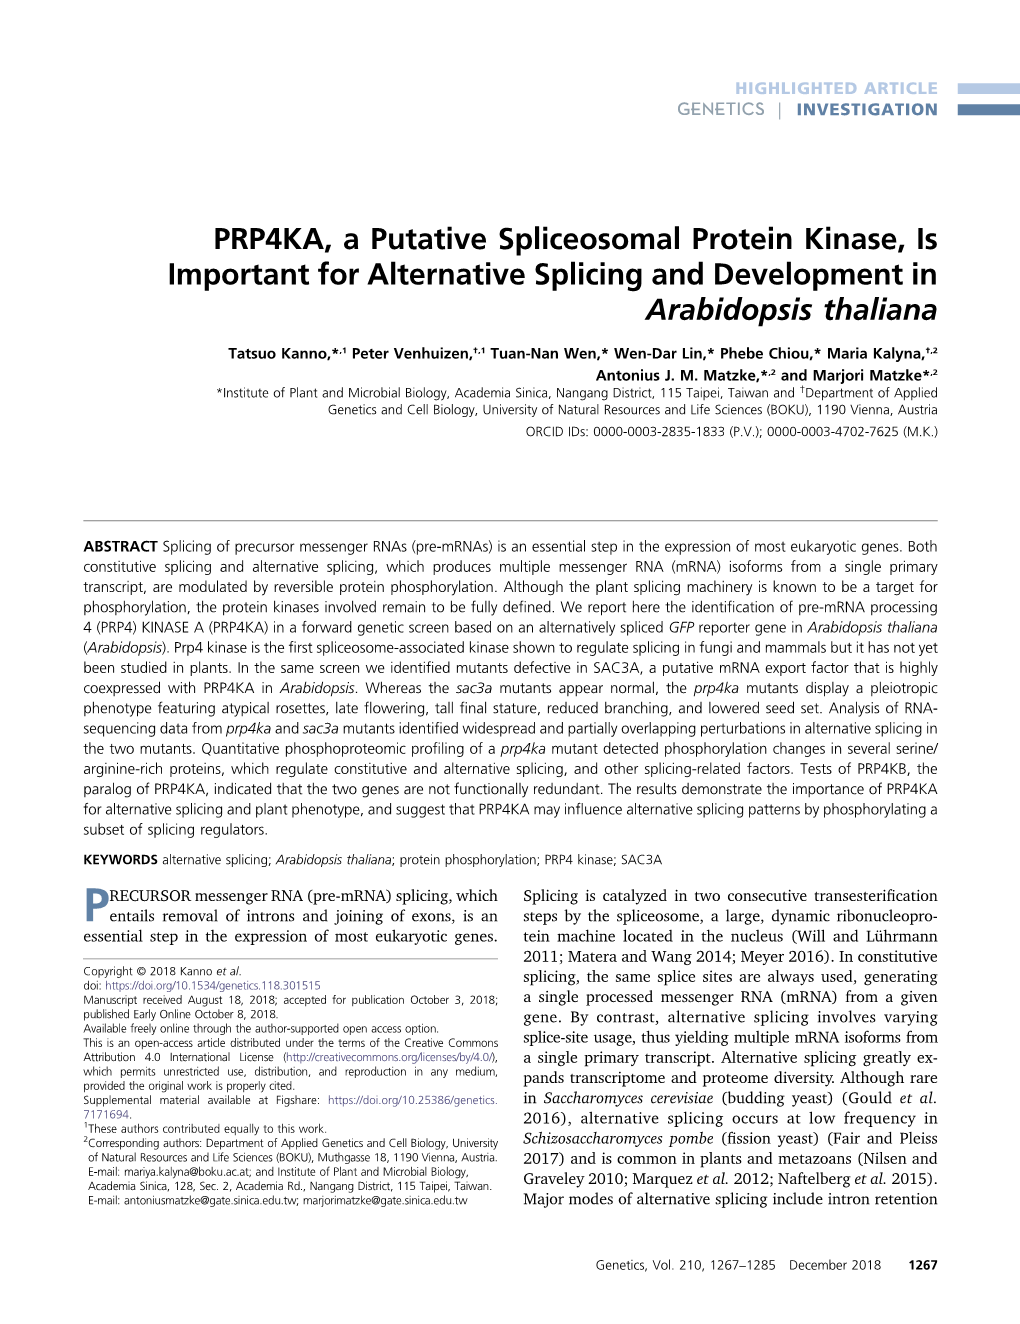 PRP4KA, a Putative Spliceosomal Protein Kinase, Is Important for Alternative Splicing and Development in Arabidopsis Thaliana